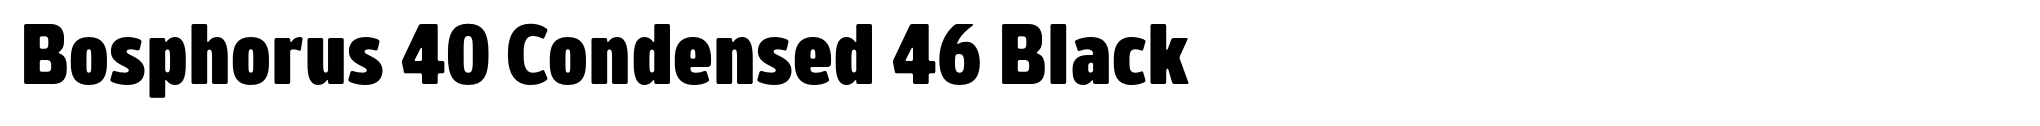 Bosphorus 40 Condensed 46 Black image